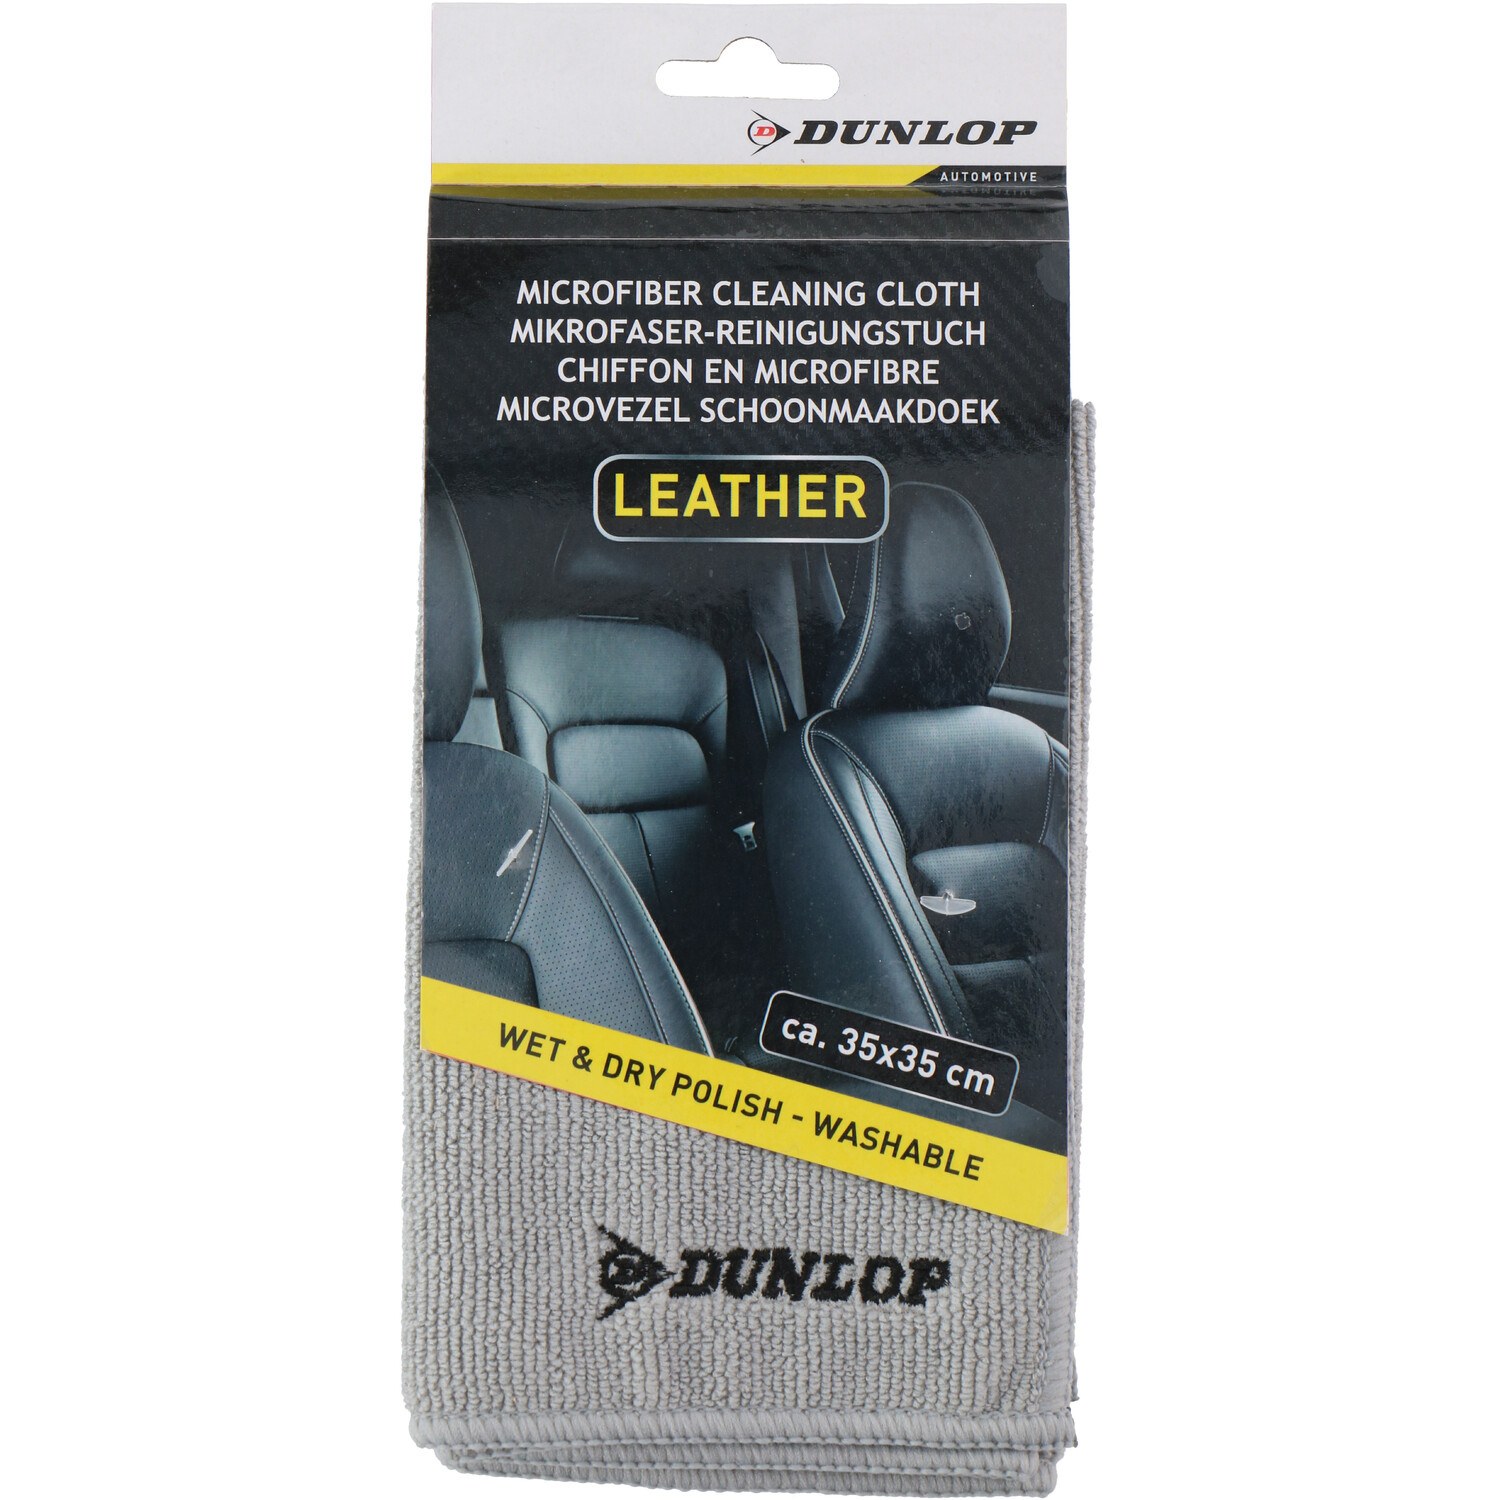 Dunlop Microfibre Cloth - Leather Image 1